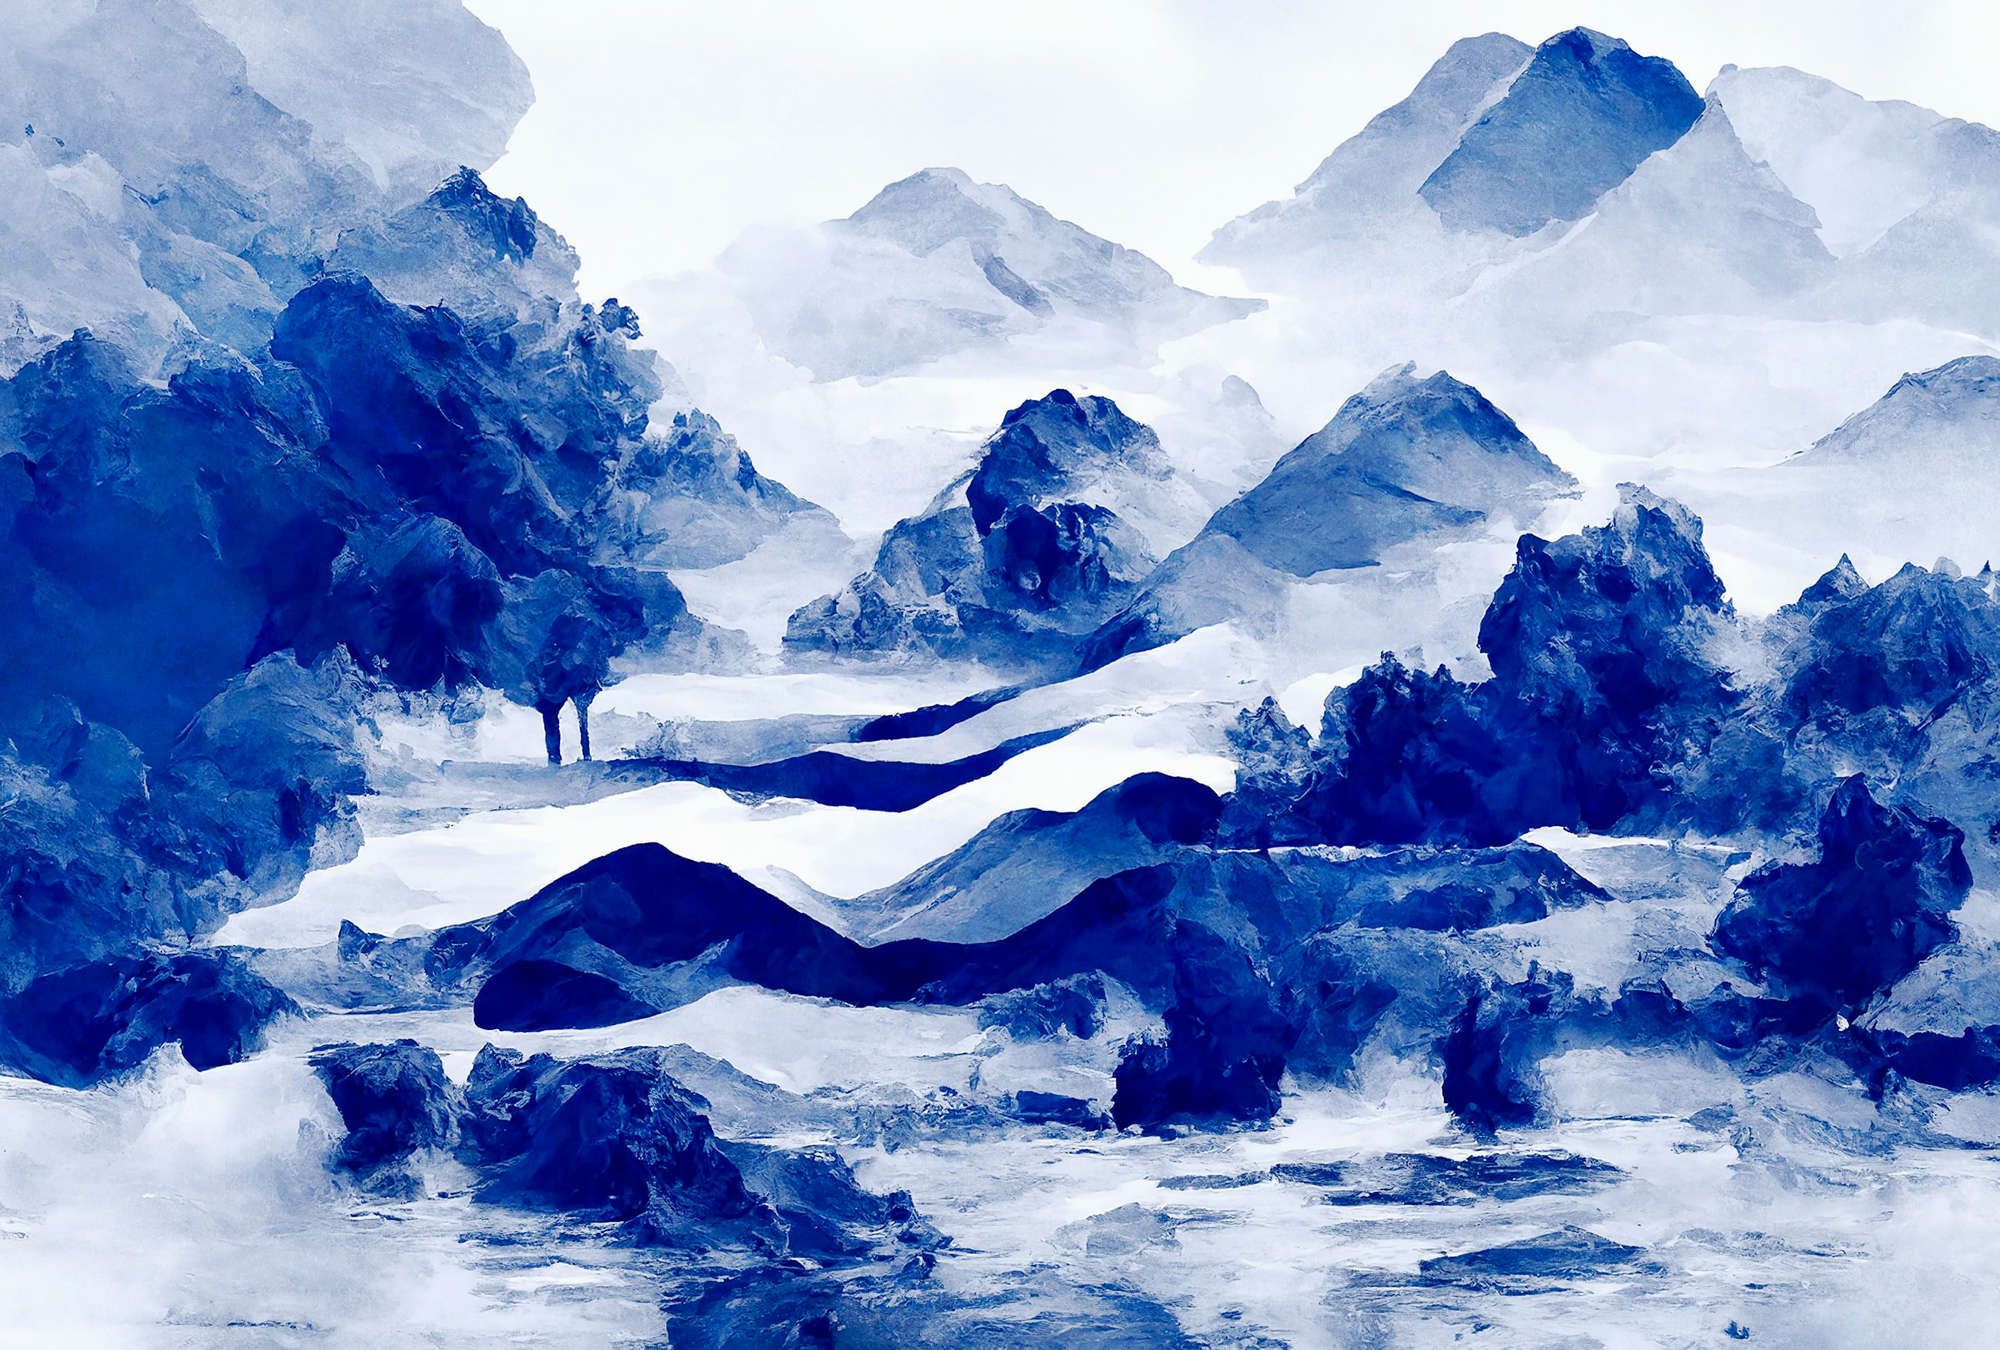             Photo wallpaper »tinterra 3« - Landscape with mountains & fog - Blue | Matte, Smooth non-woven fabric
        